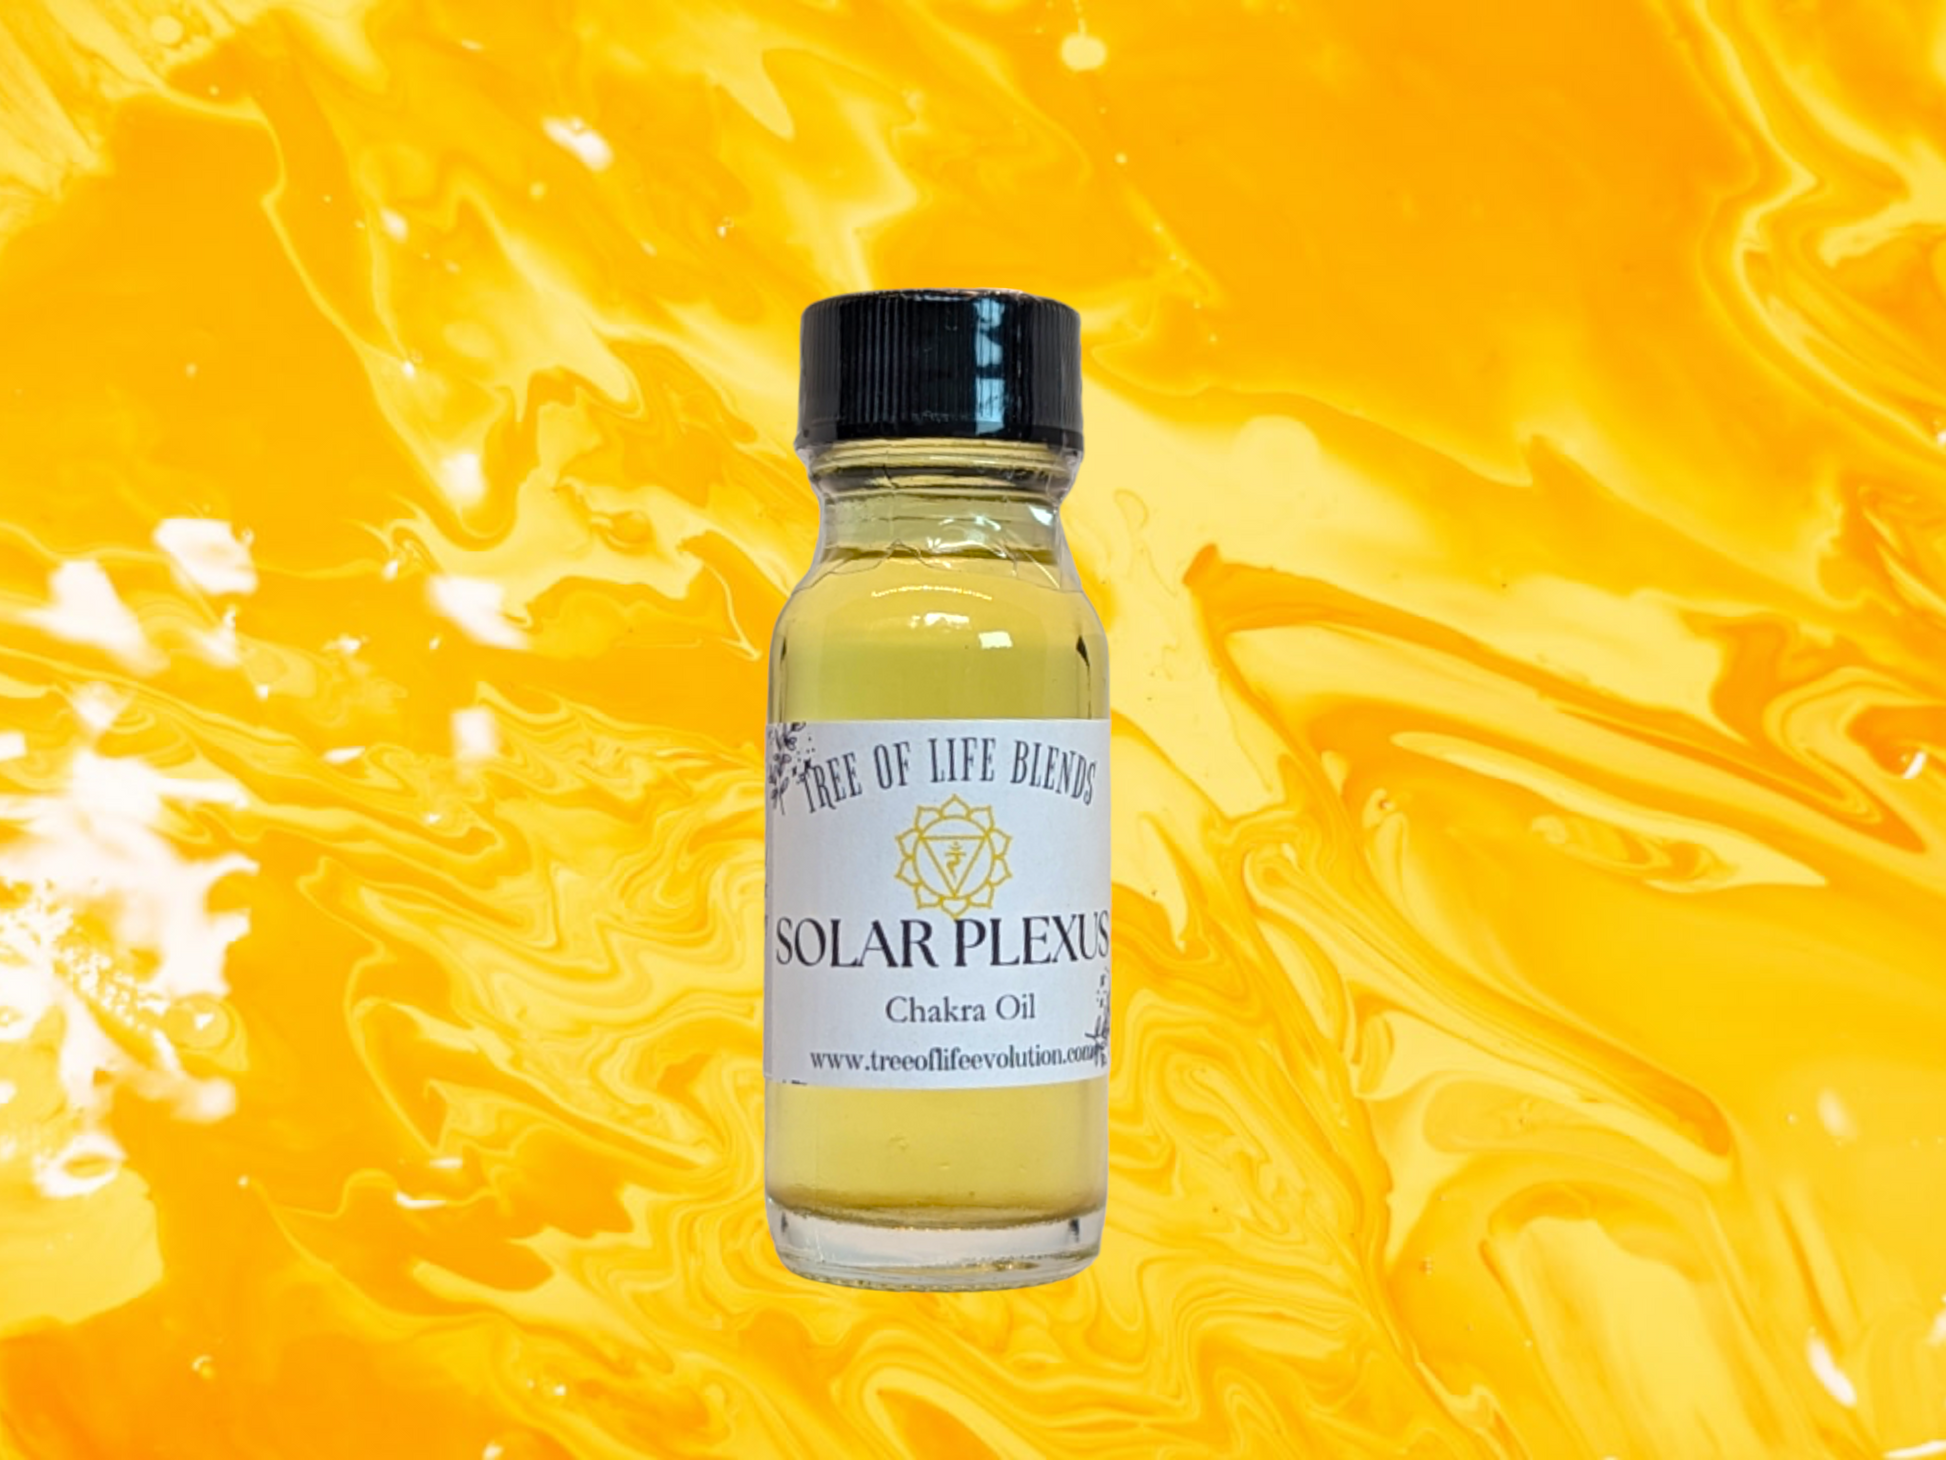 Solar Plexus chakra oil from Tree of Life on yellow swirl background